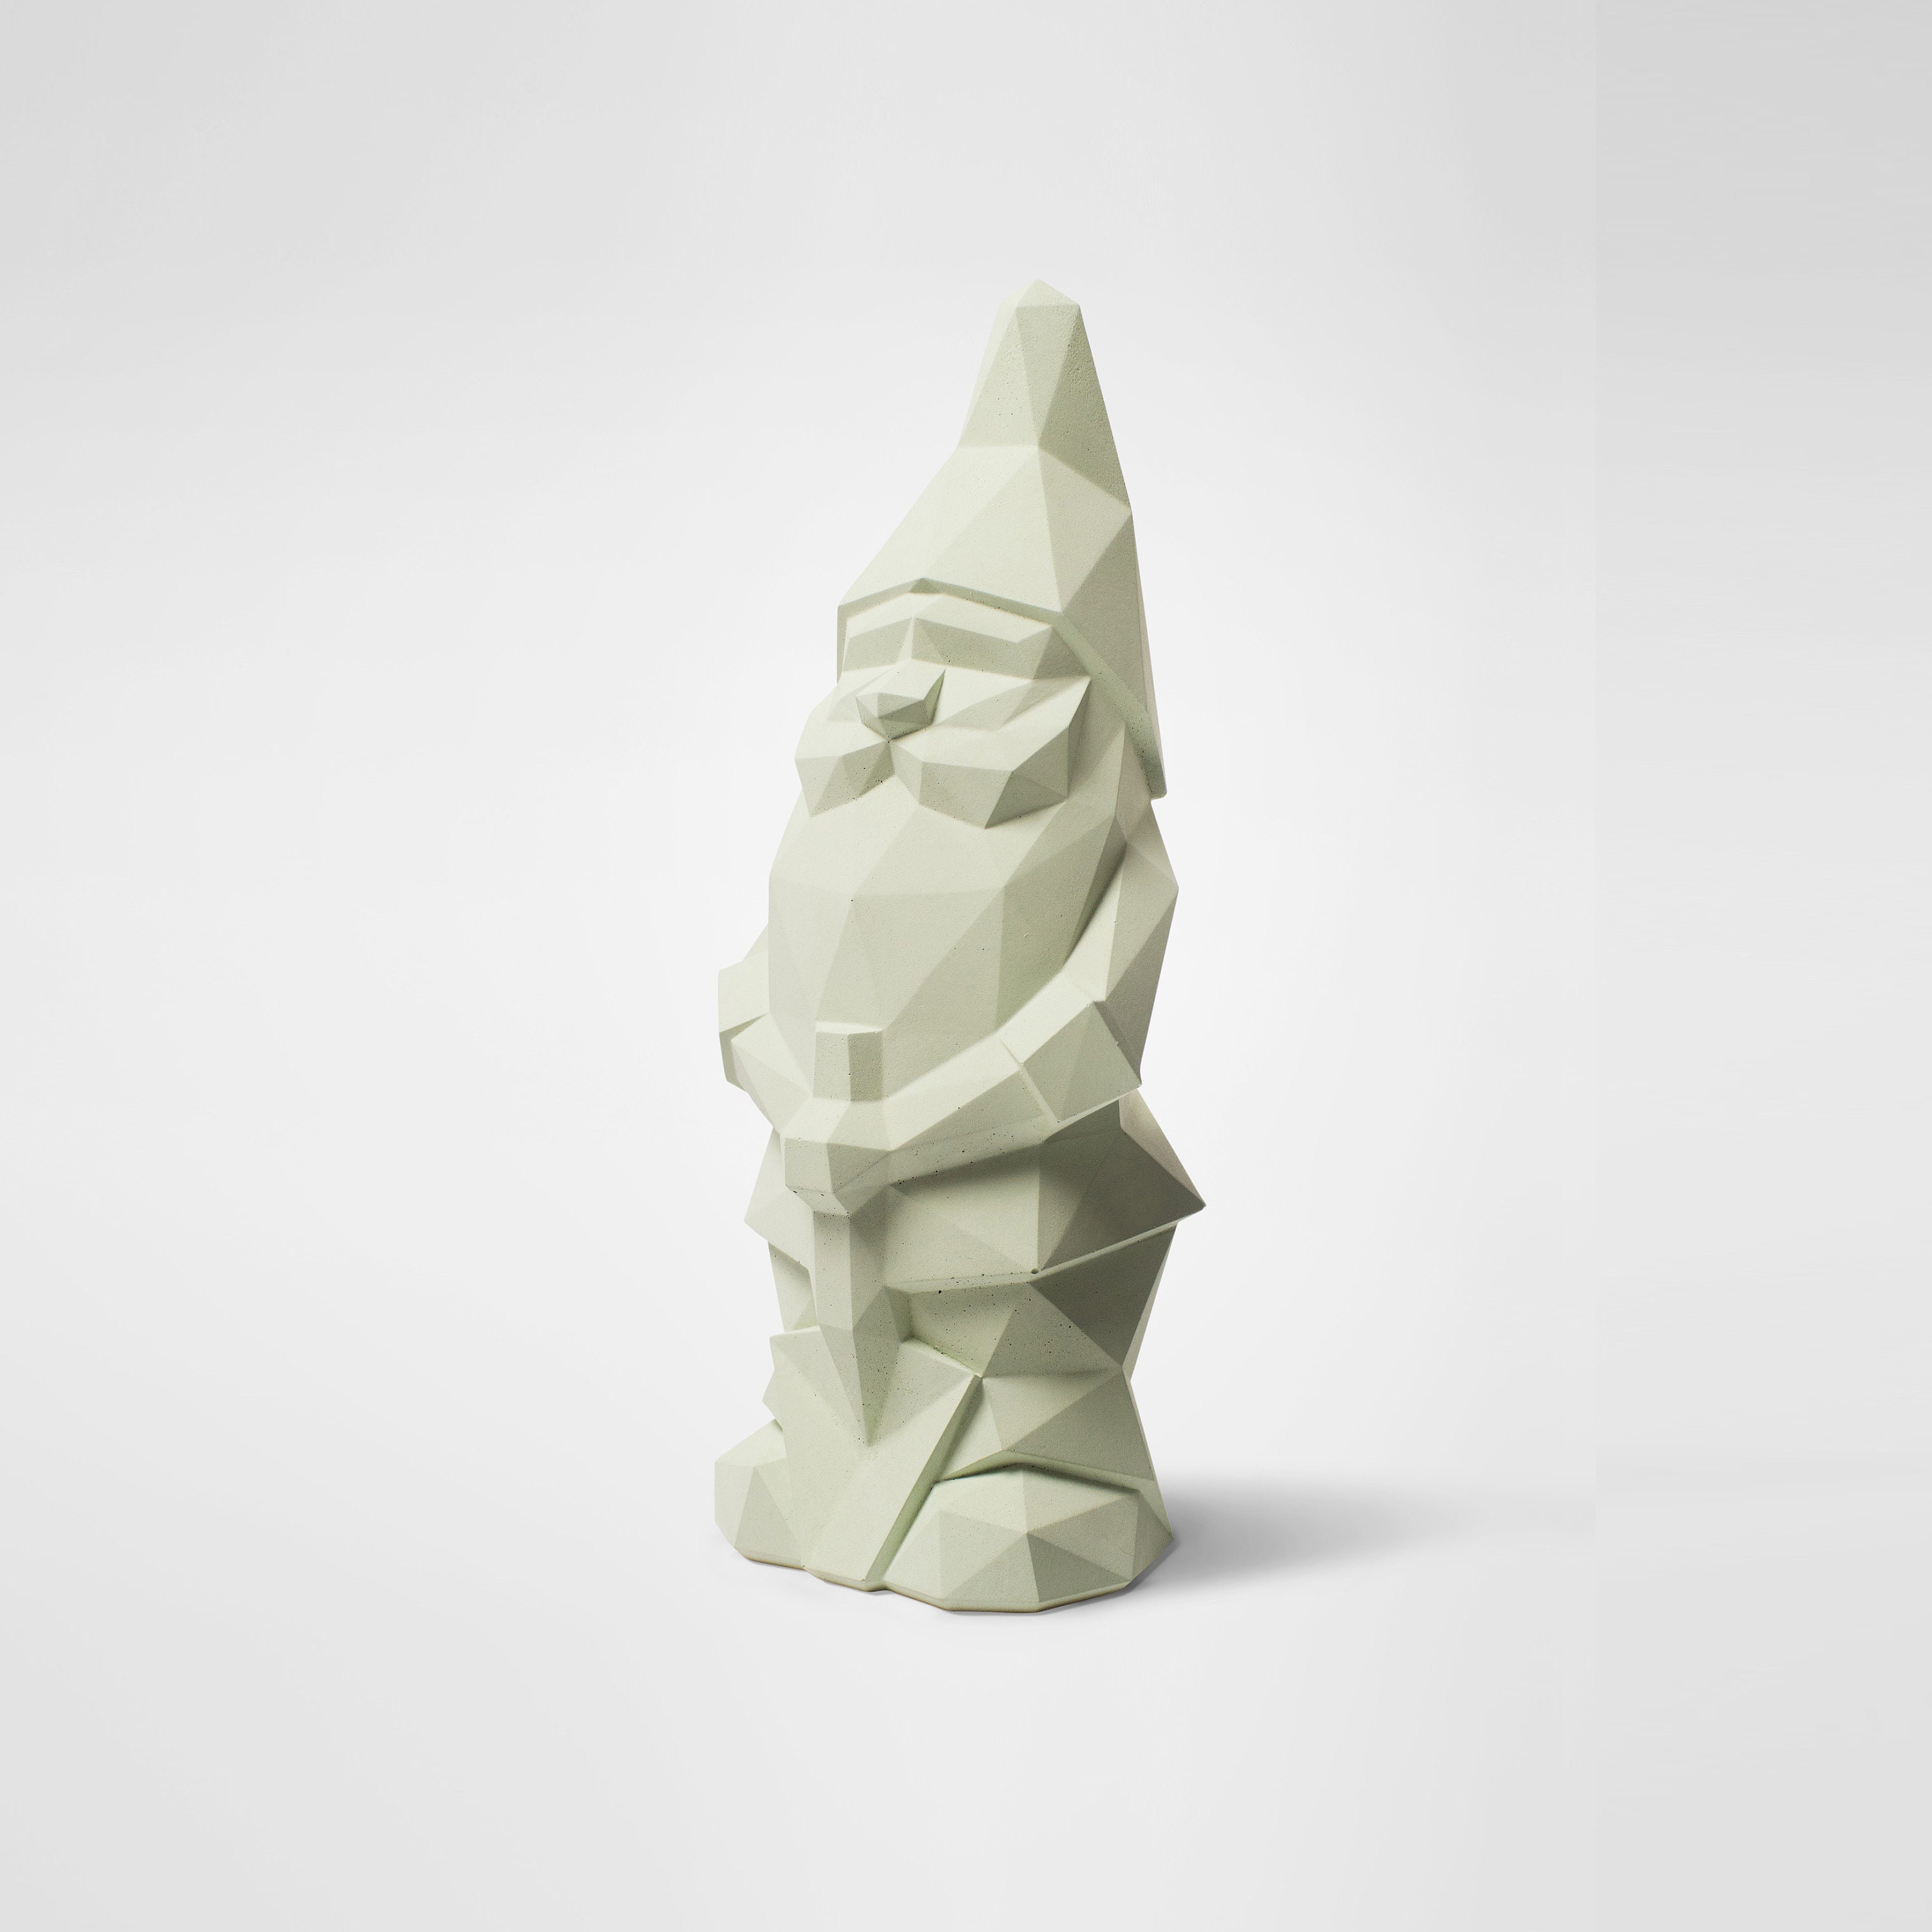 Symple Stuff Purini Geometric & Shapes Figurine / Sculpture